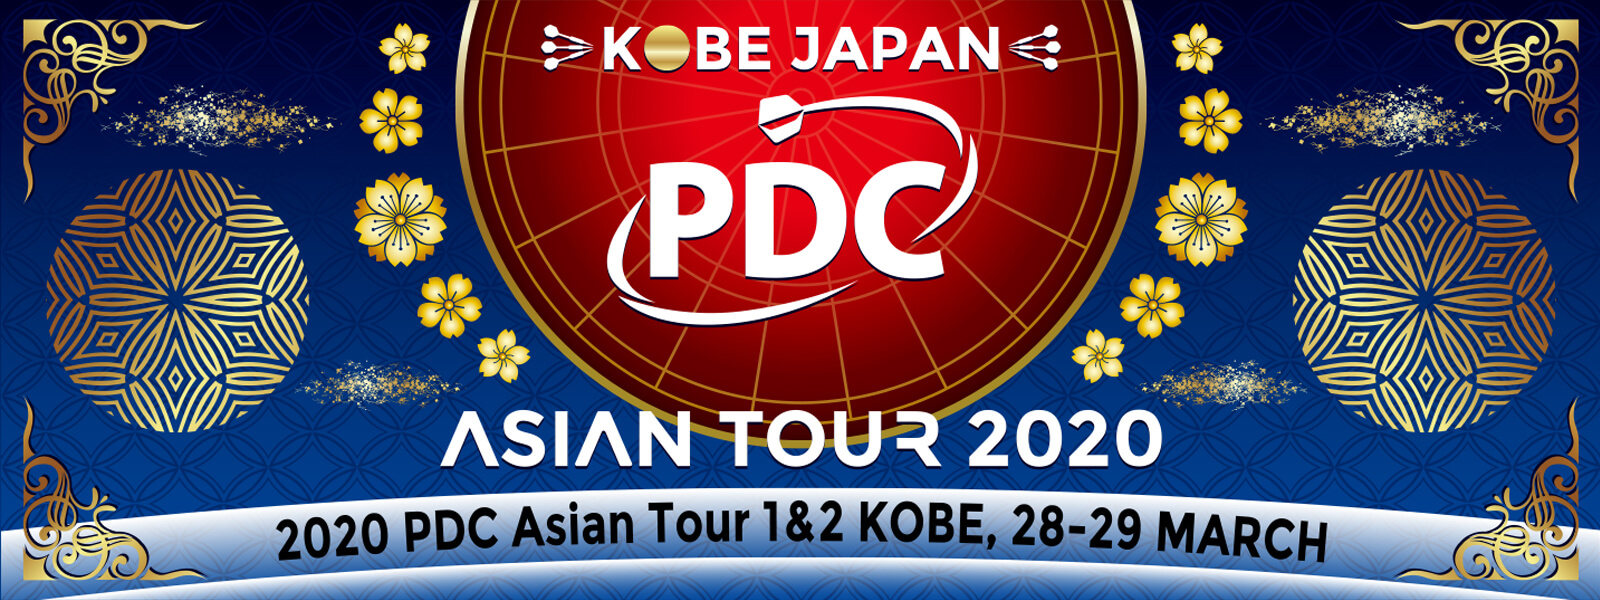 pdc asian tour 2020 kobe